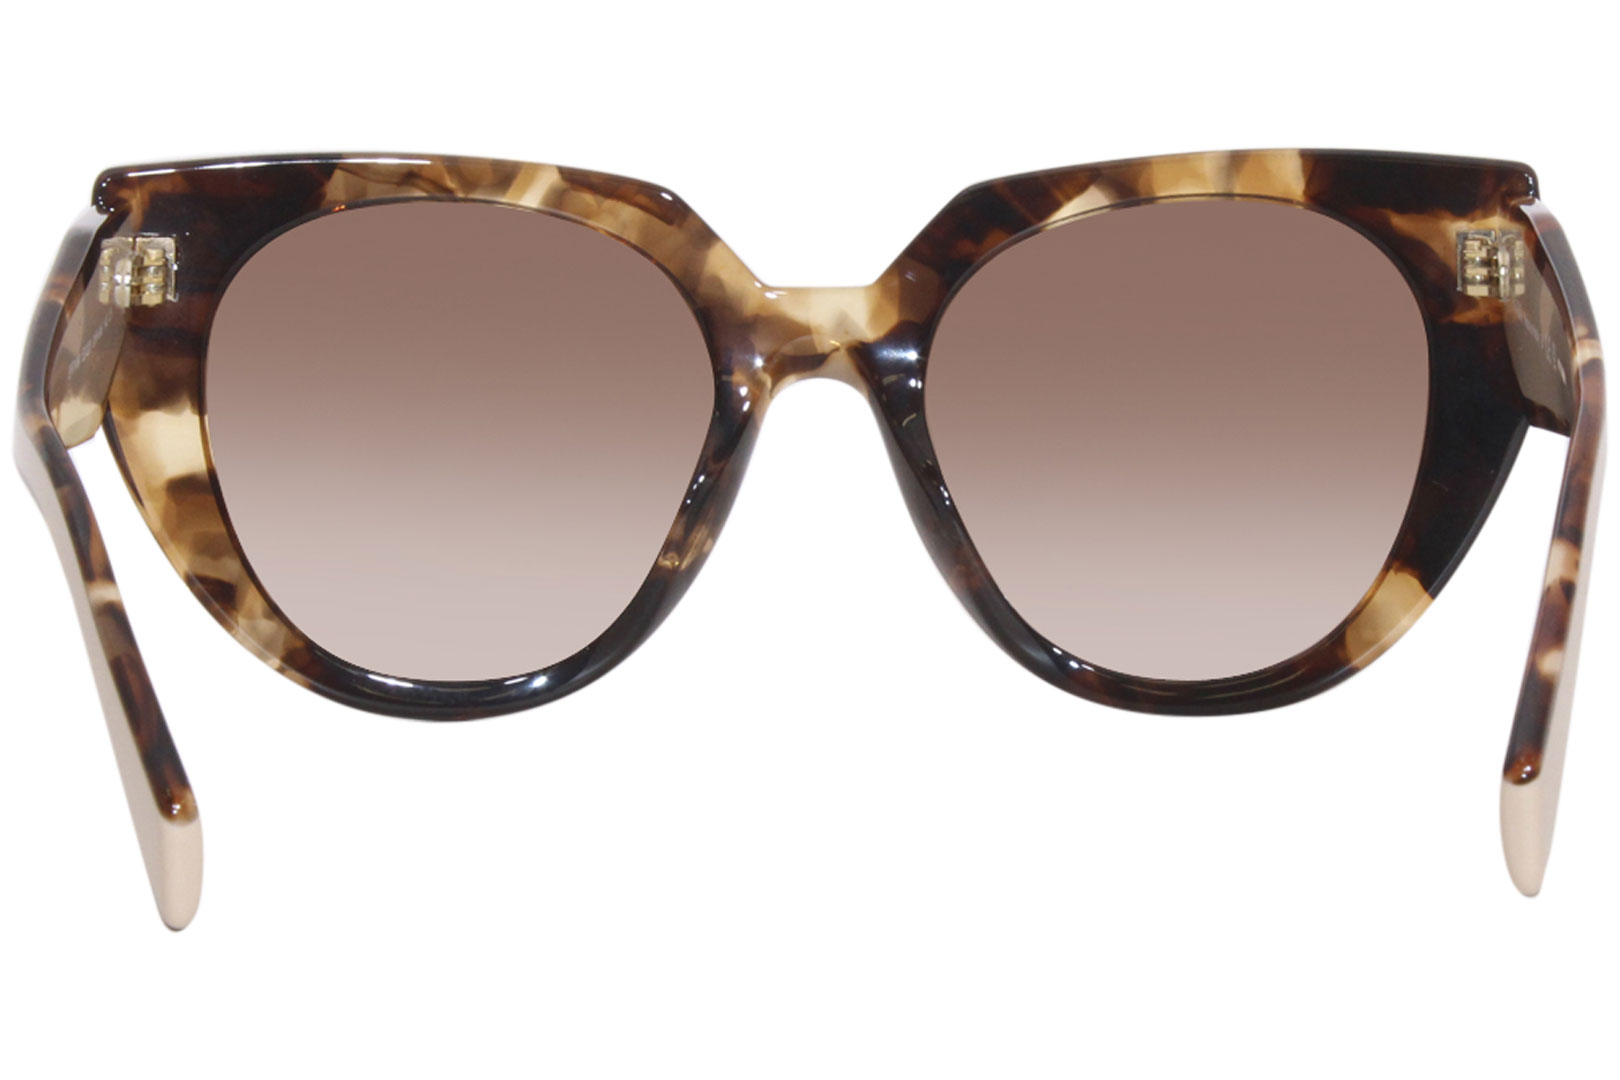 Prada SPR-14W 01R-0A6 Sunglasses Women's Caramel Tortoise/Brown ...